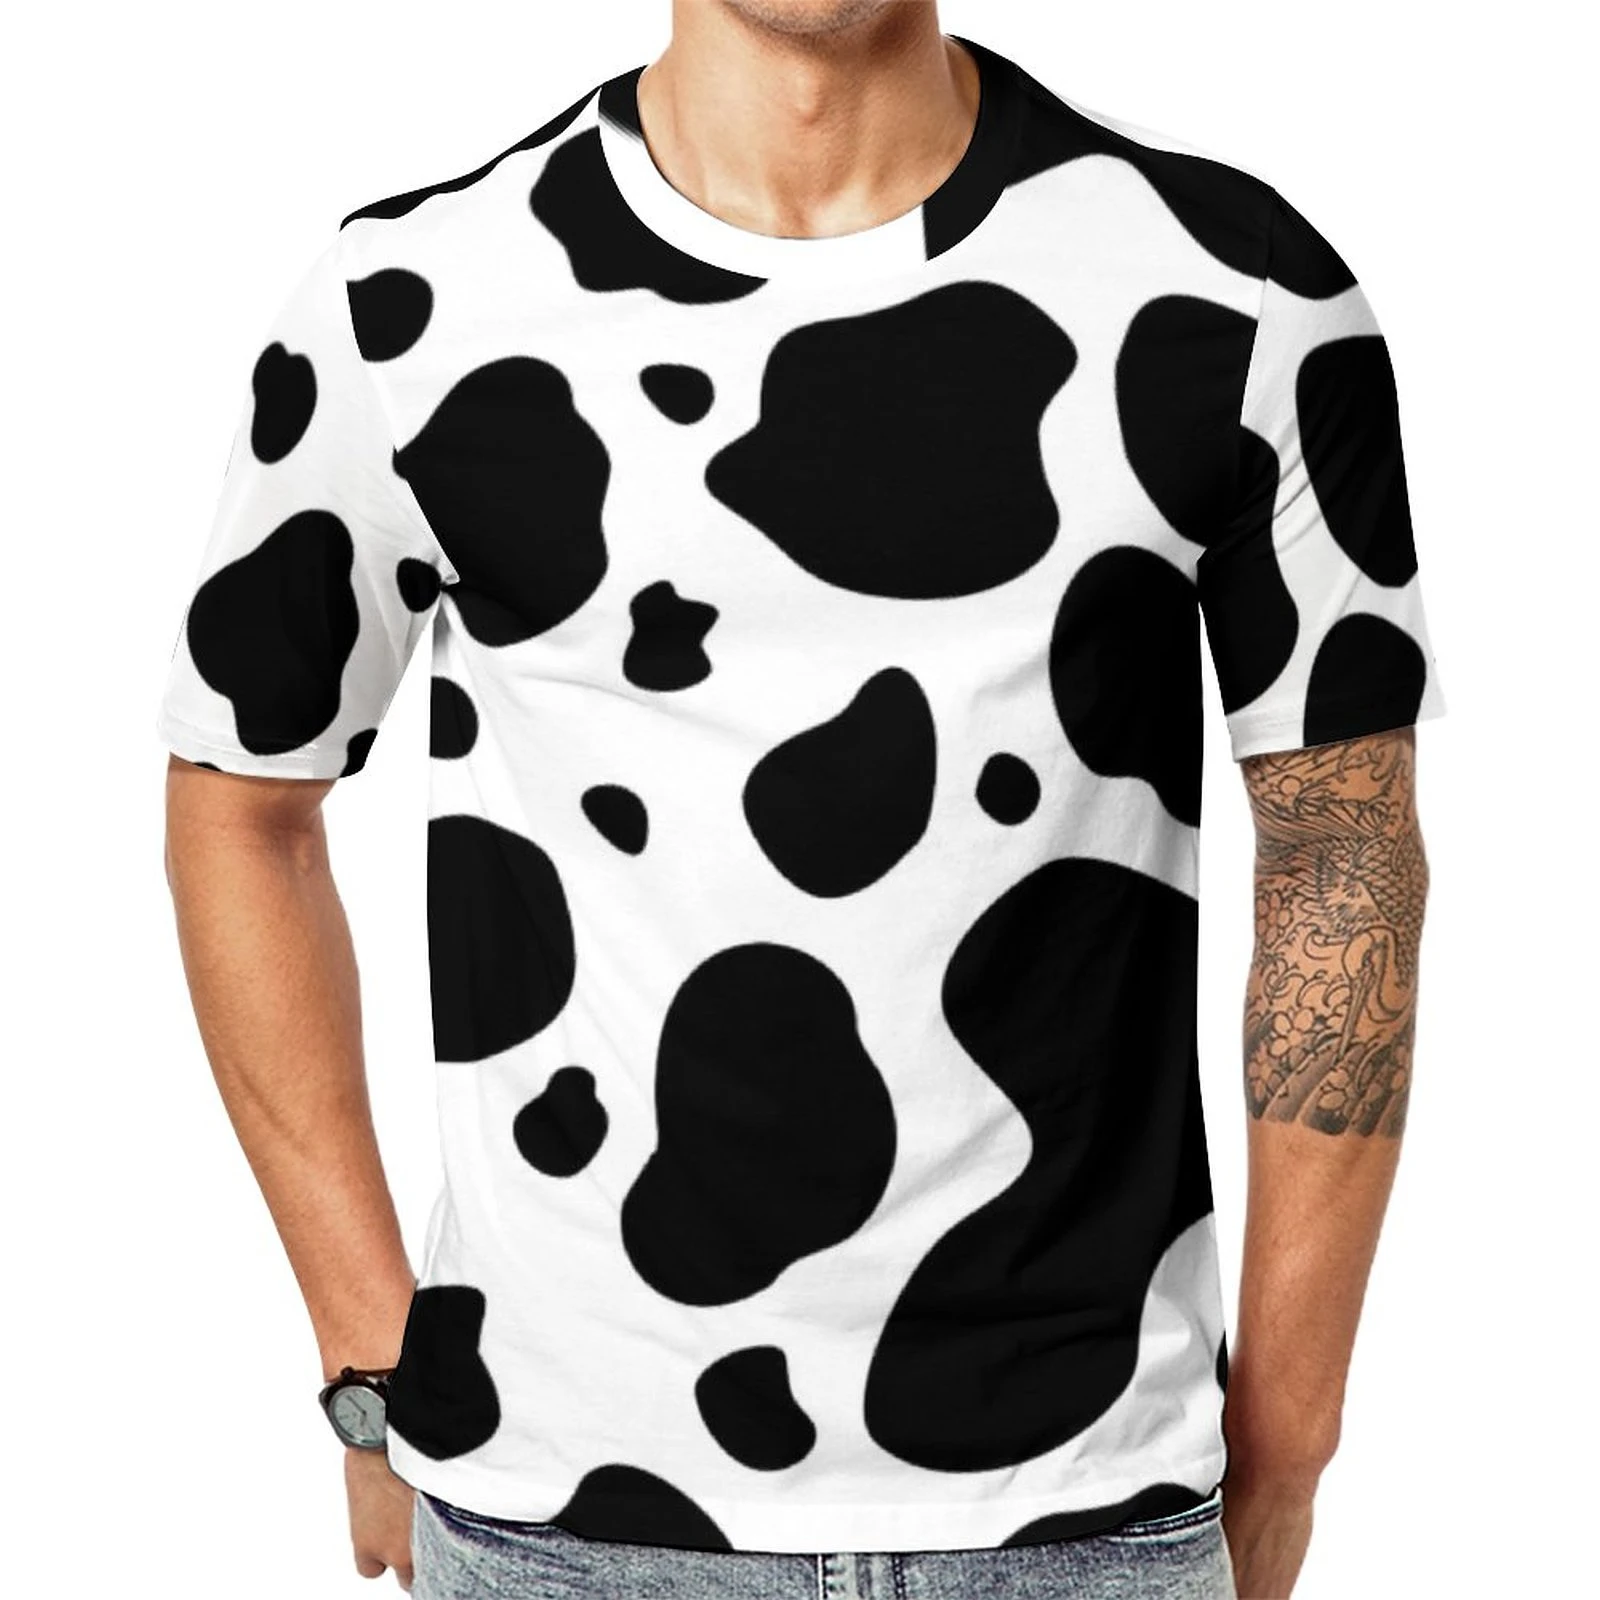 Cow Pattern T-shirt | Cow Print T-shirt | Men's Cow Shirt | Cow Print Shirt  | Cows Clothing - T-shirts - Aliexpress